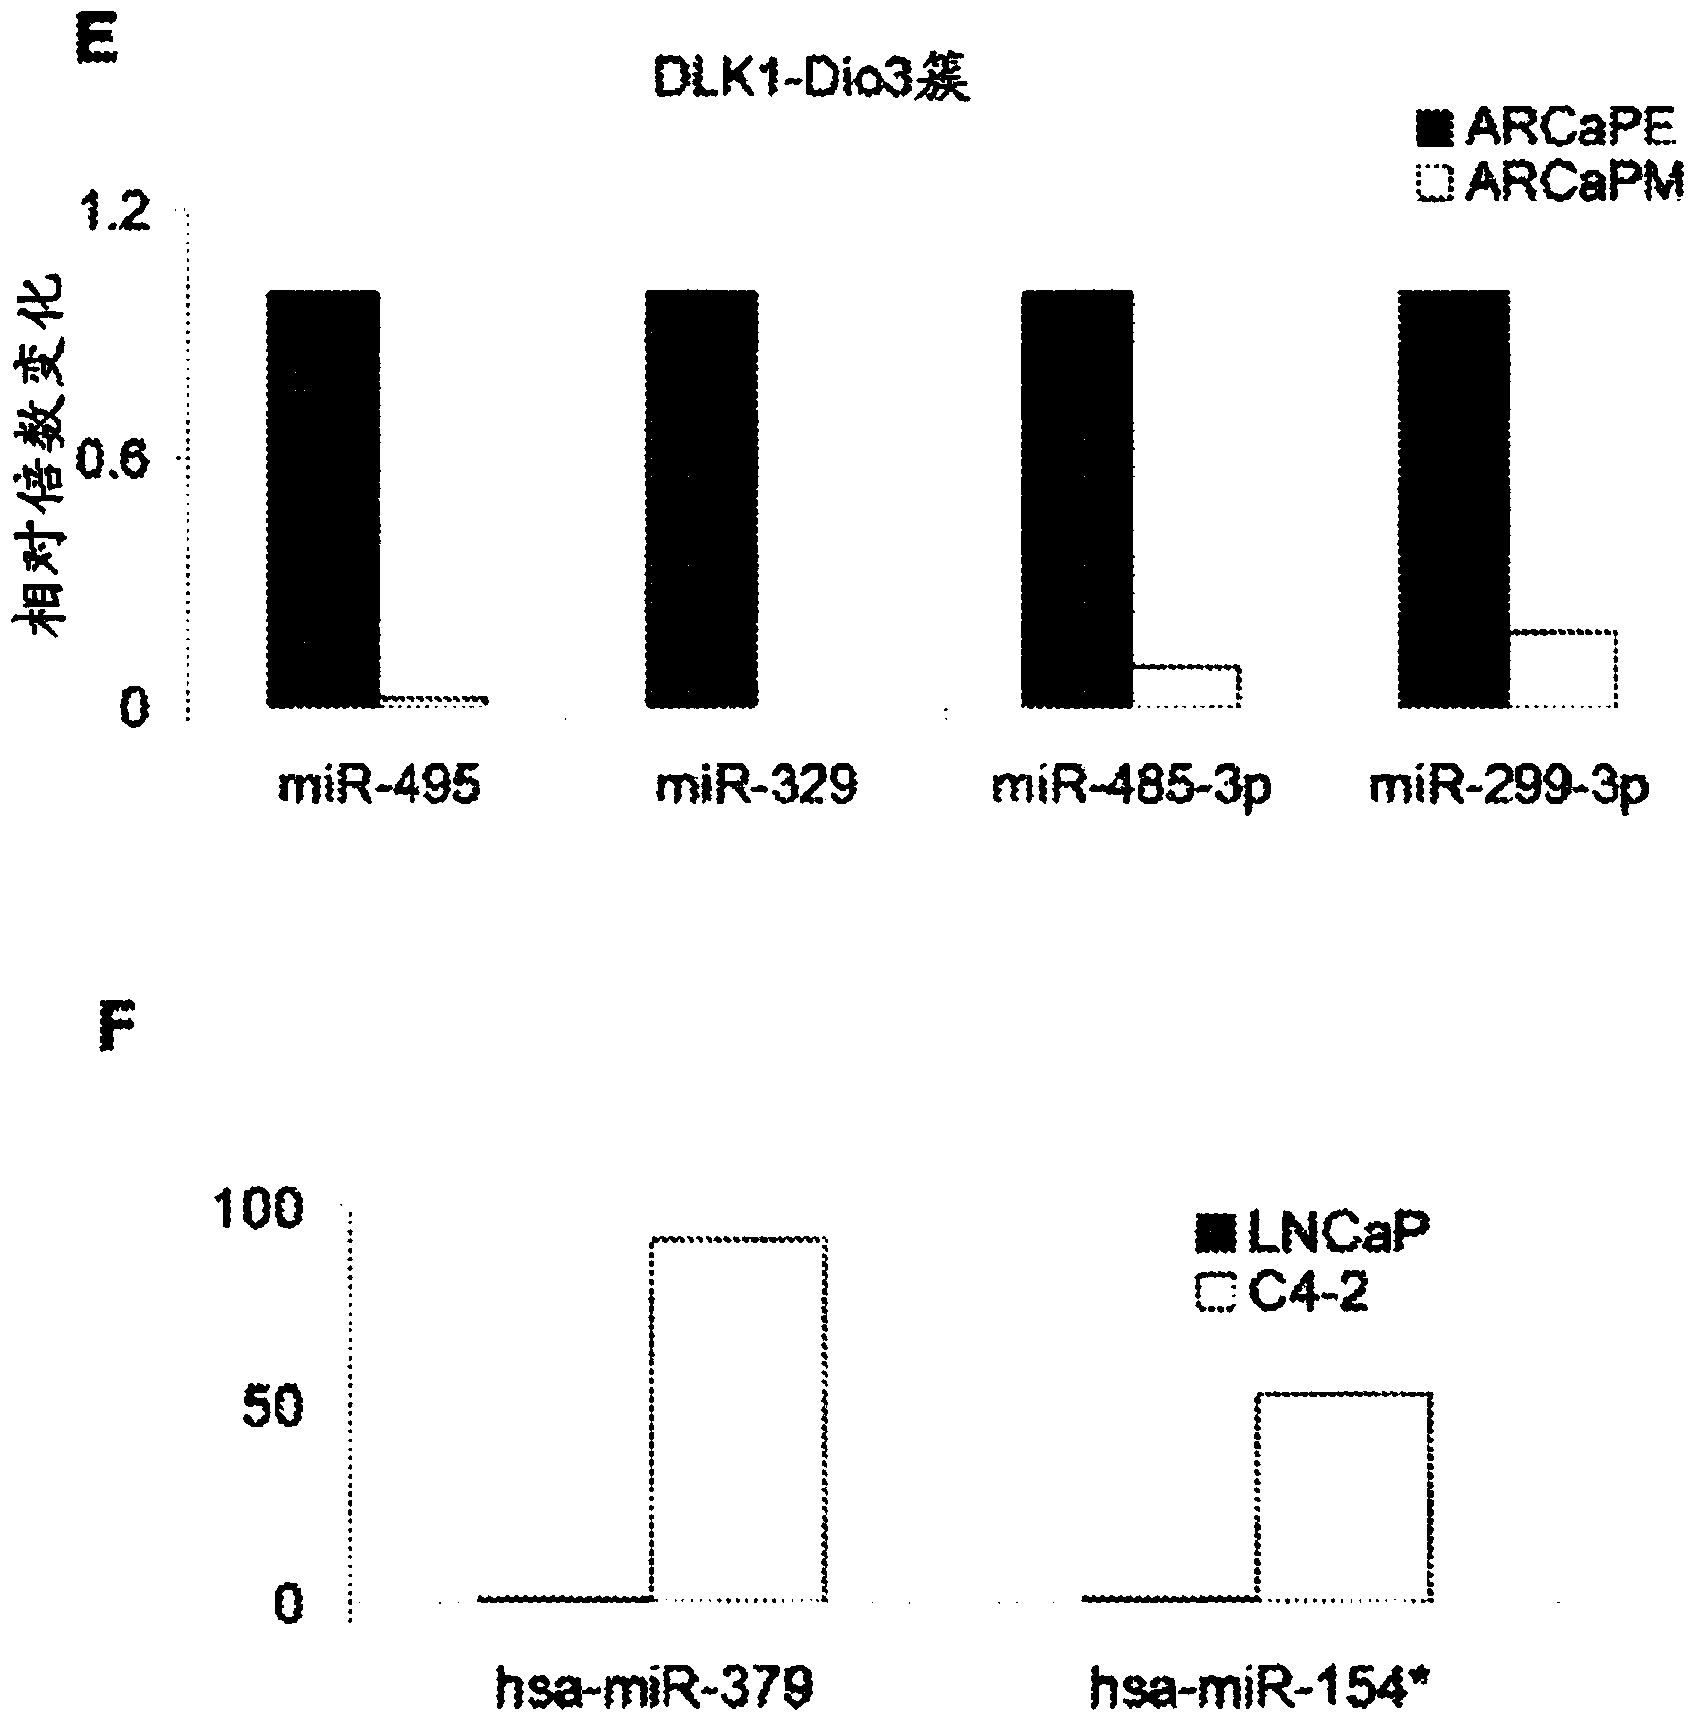 Targeting micro RNAS MIR-409-5P, MIR-379 AND MIR-154* to treat prostate cancer bone metastasis and drug resistant lung cancer